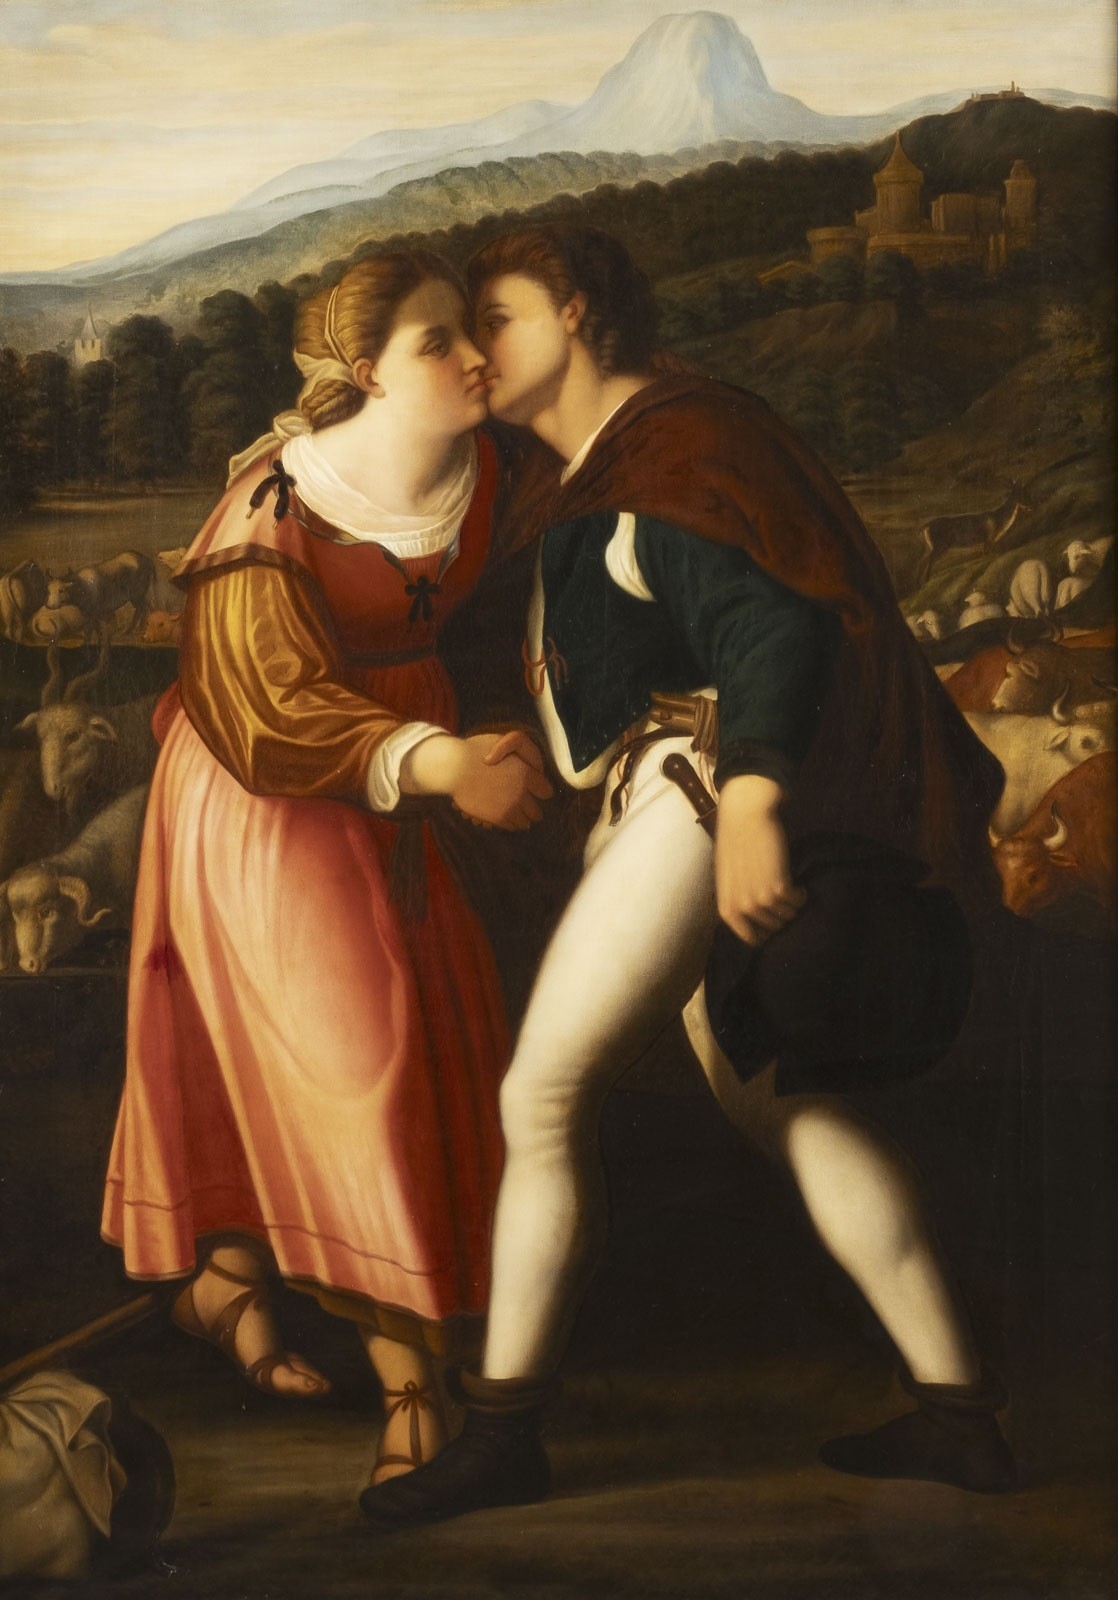 JACOB AND RACHEL by Jacopo Palma il Vecchio, 19th century